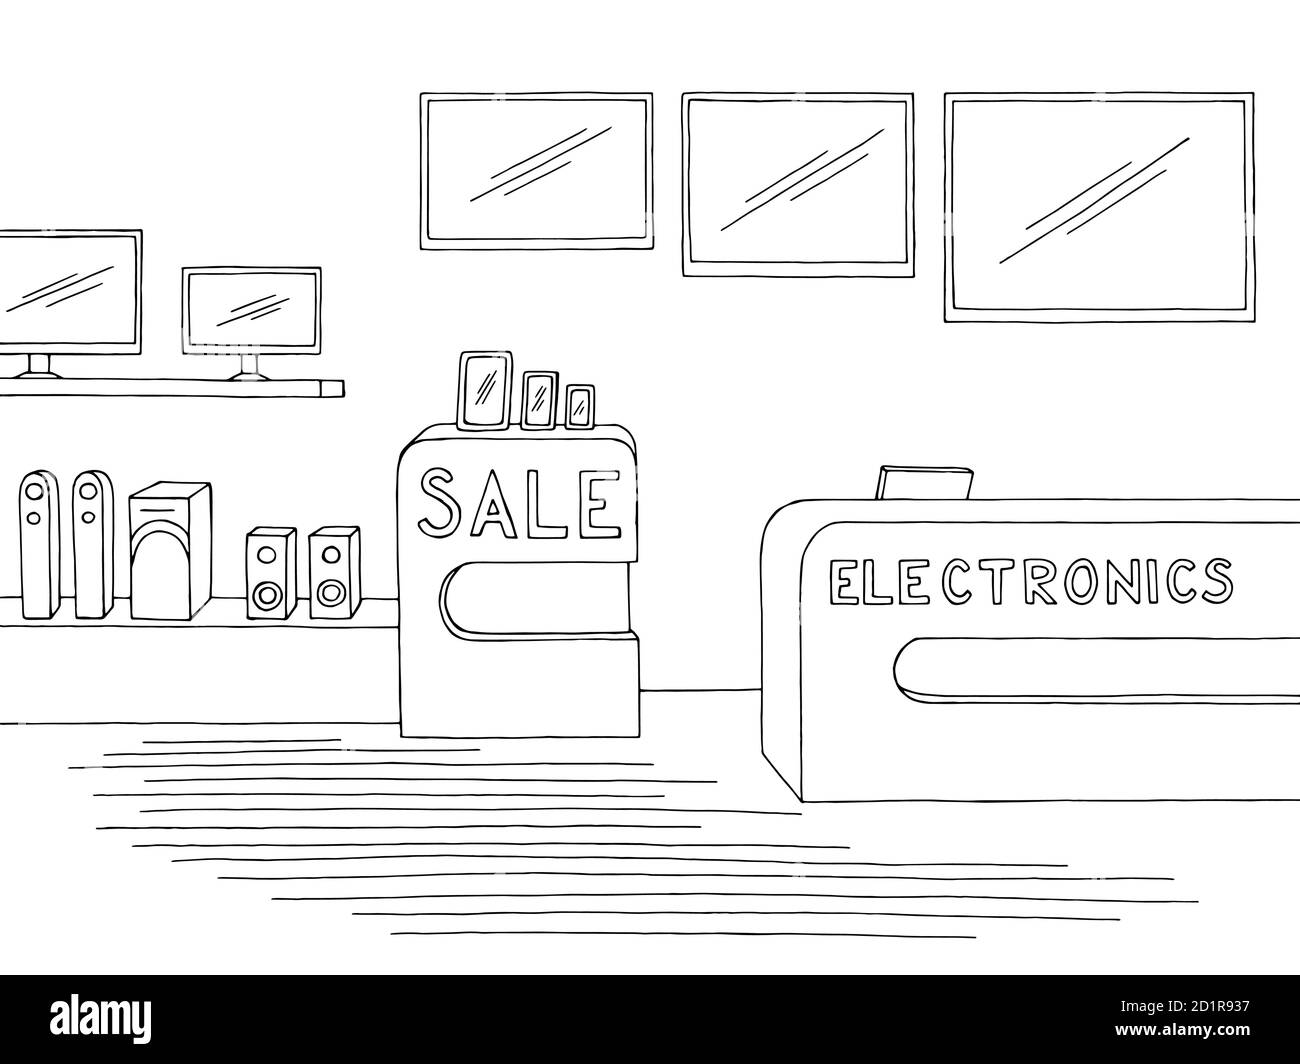 Electronics store interior graphic black white sketch illustration vector Stock Vector